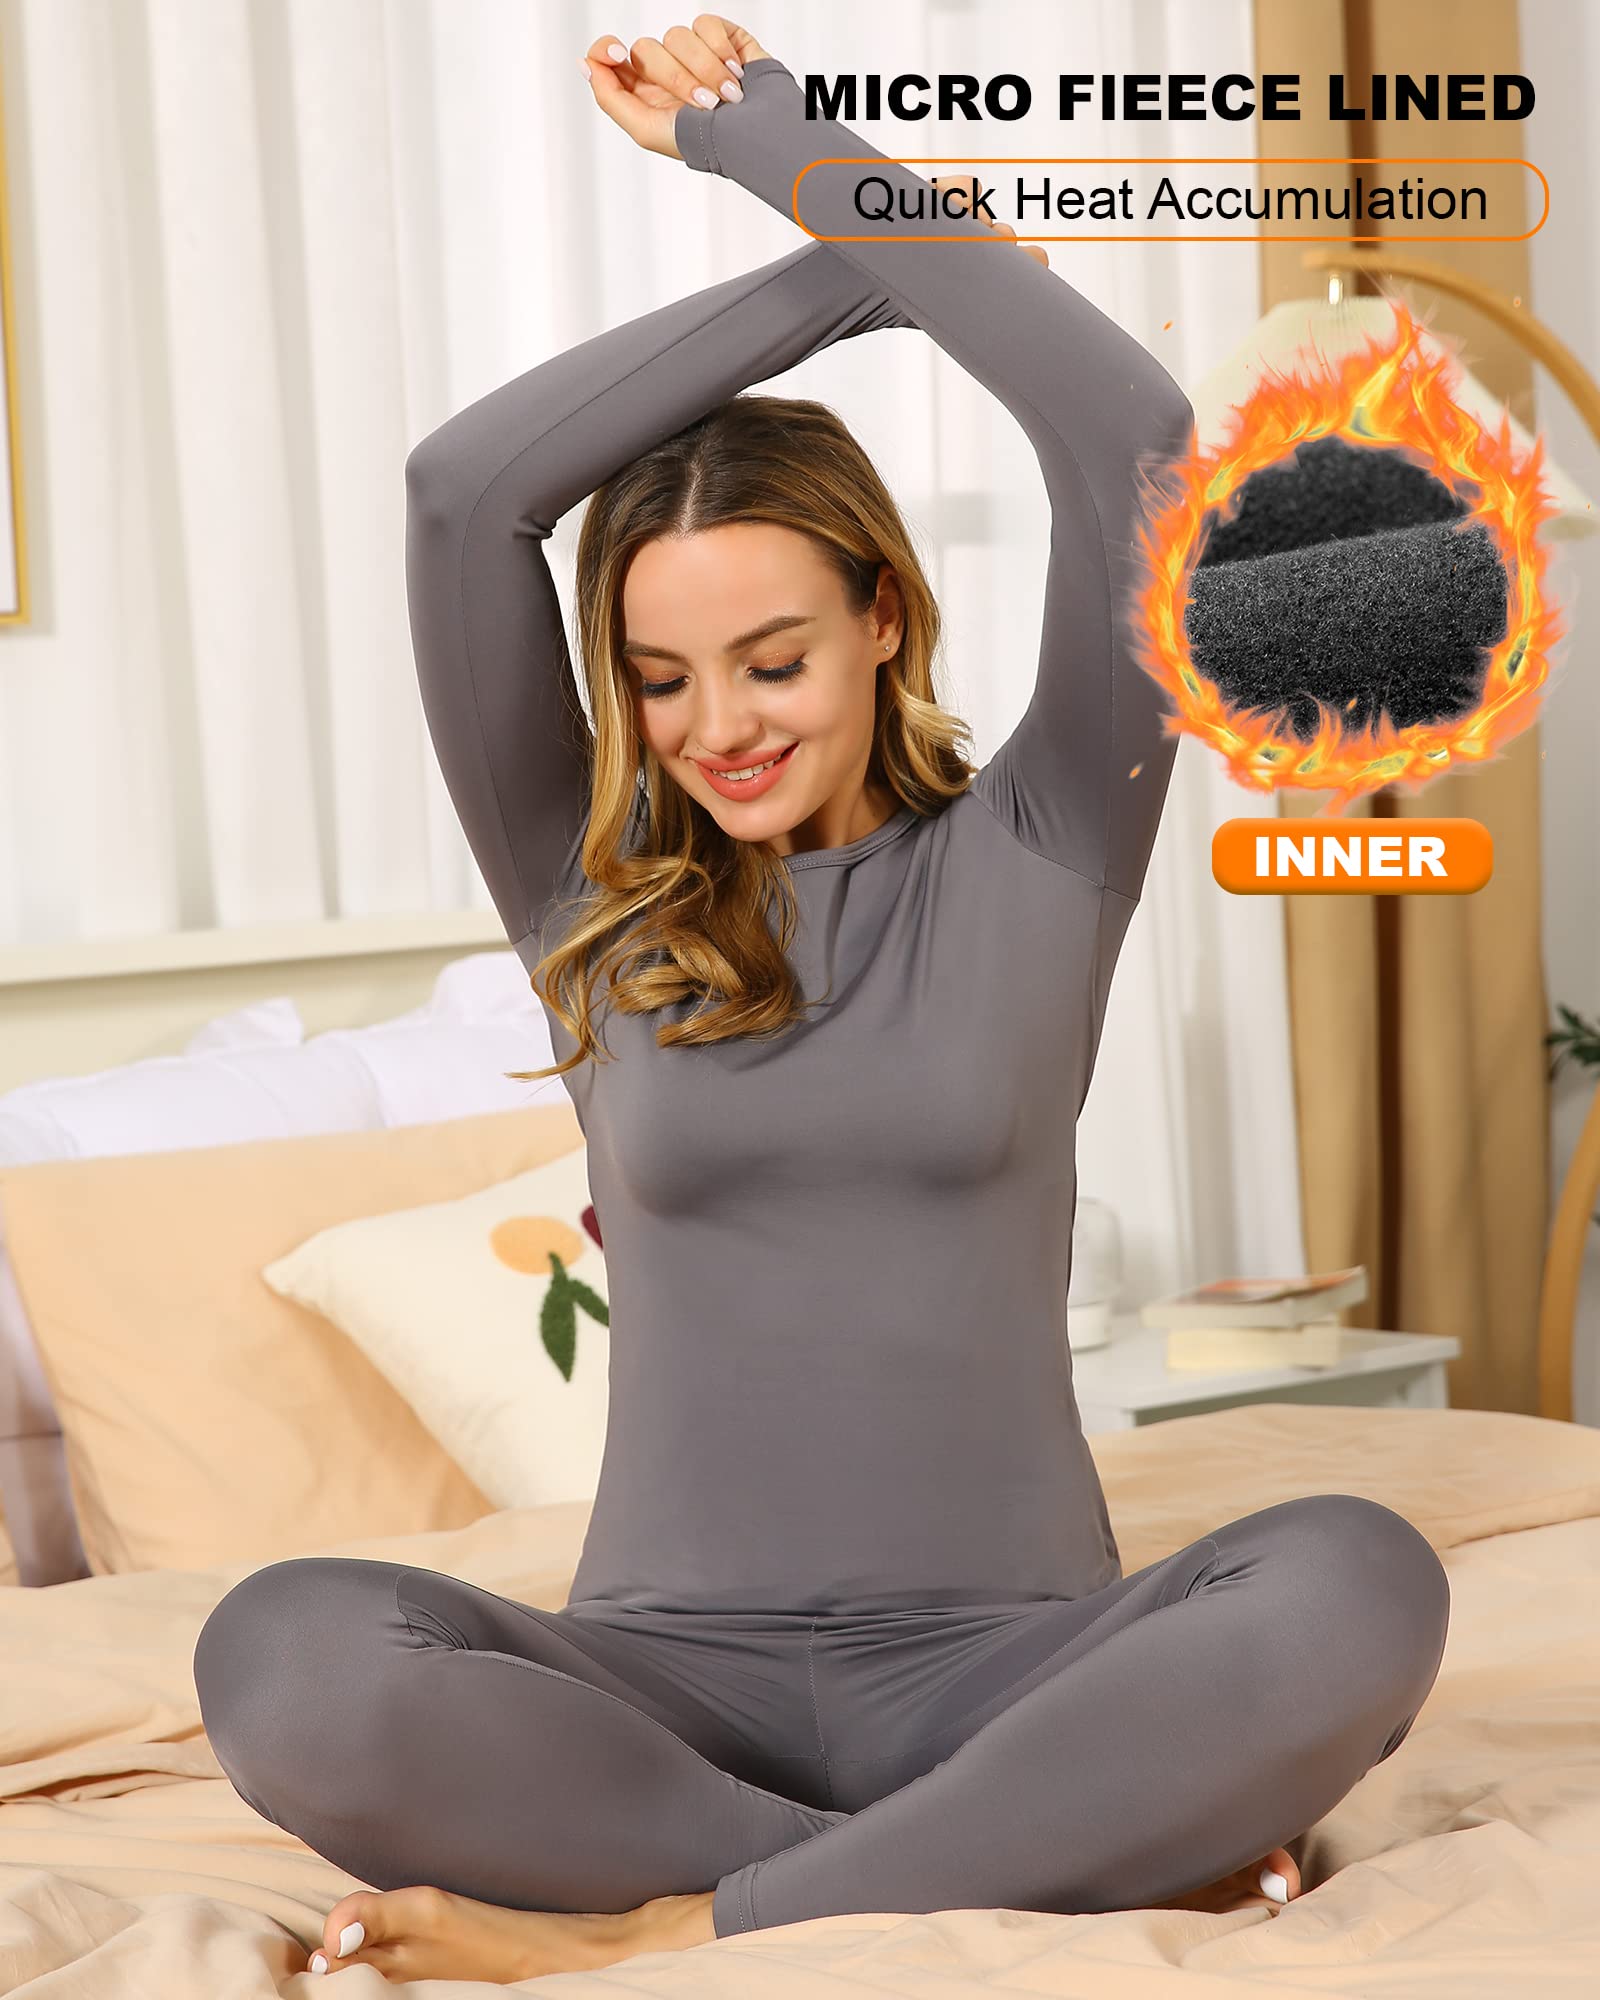 ViCherub Thermal Underwear Set for Women Long Johns Base Layer Fleece Lined Soft Top Bottom